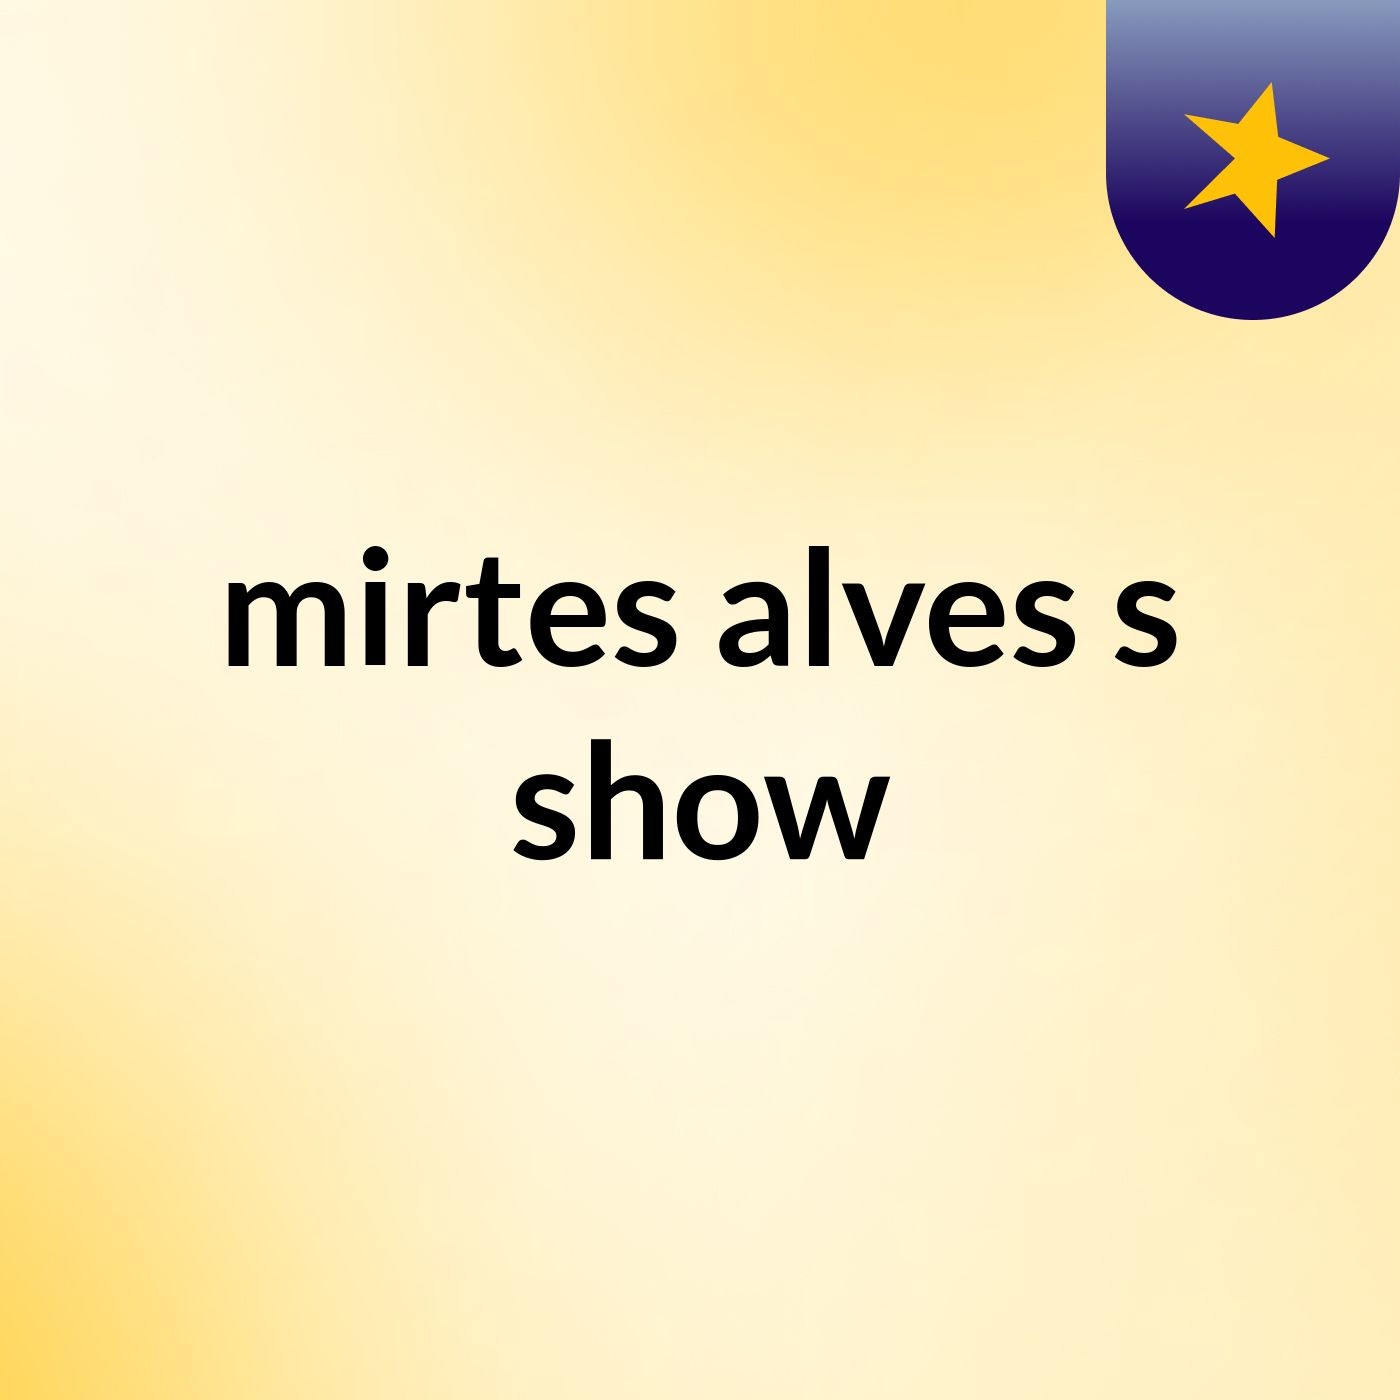 mirtes alves's show